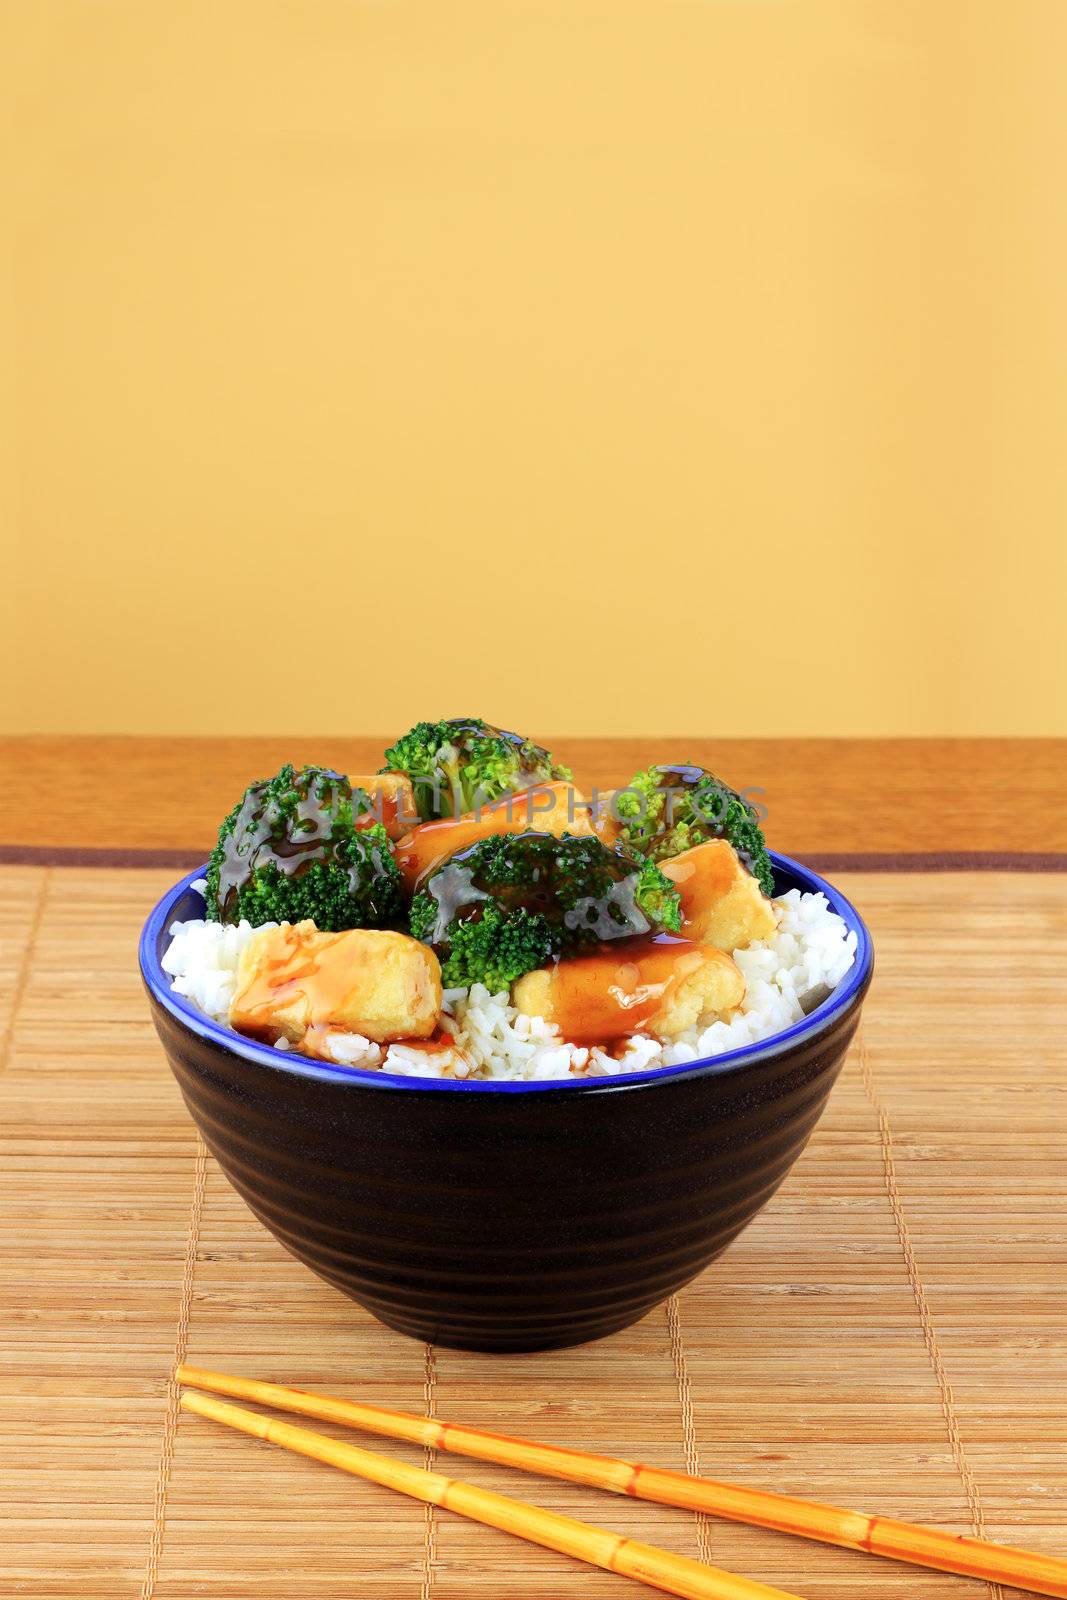 Vegetarian Stir Fry dish of crispy tofu, broccoli and orange sauce with chopsticks.